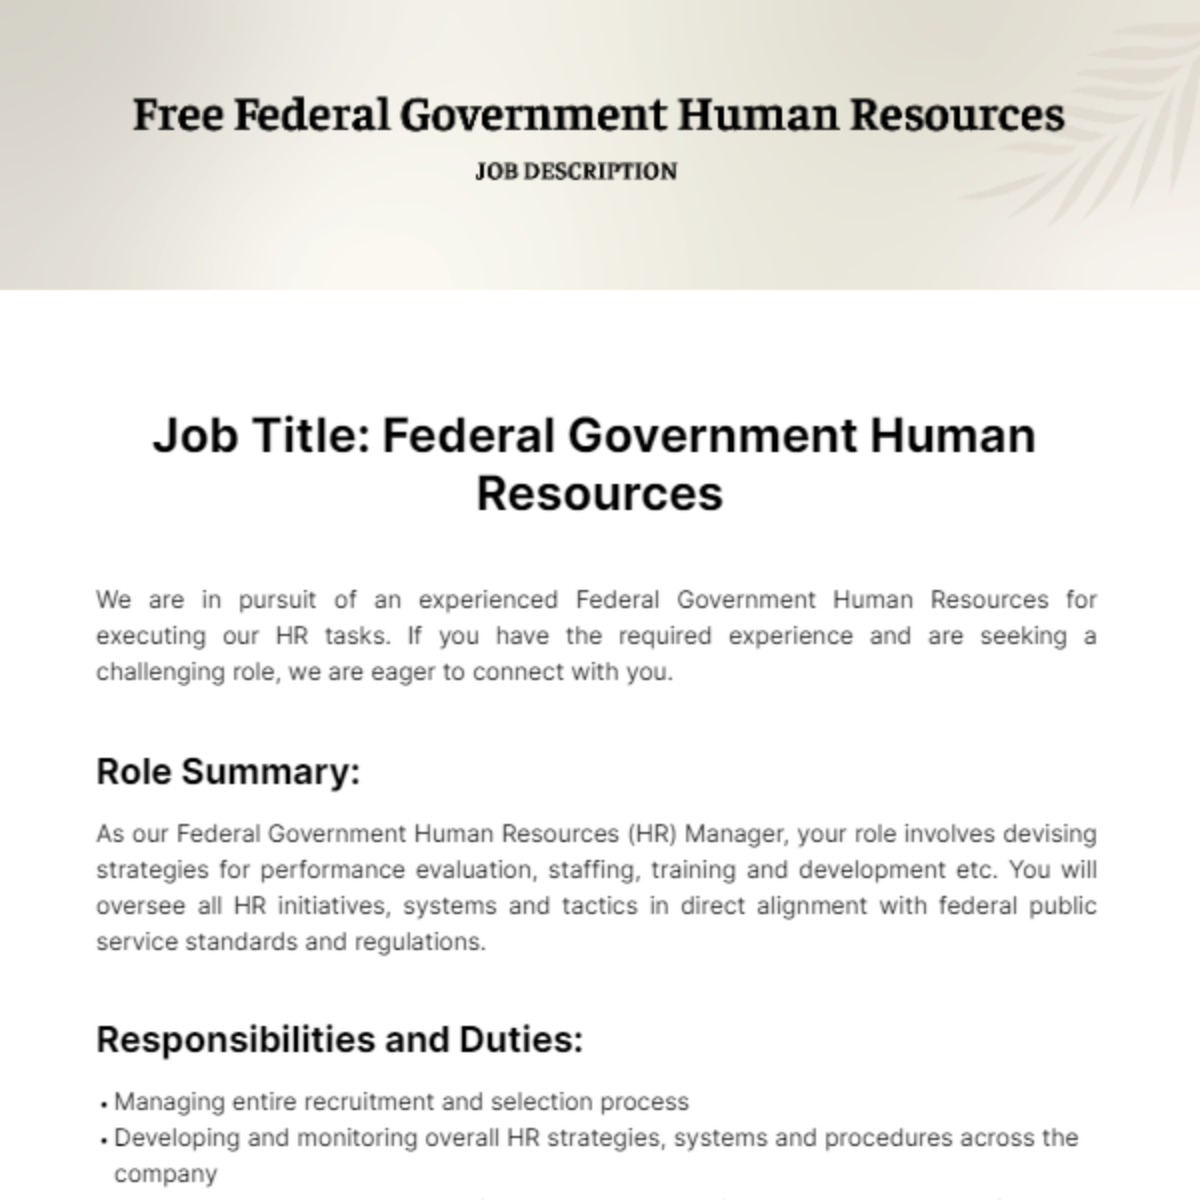 Federal Government Human Resources Job Description Template